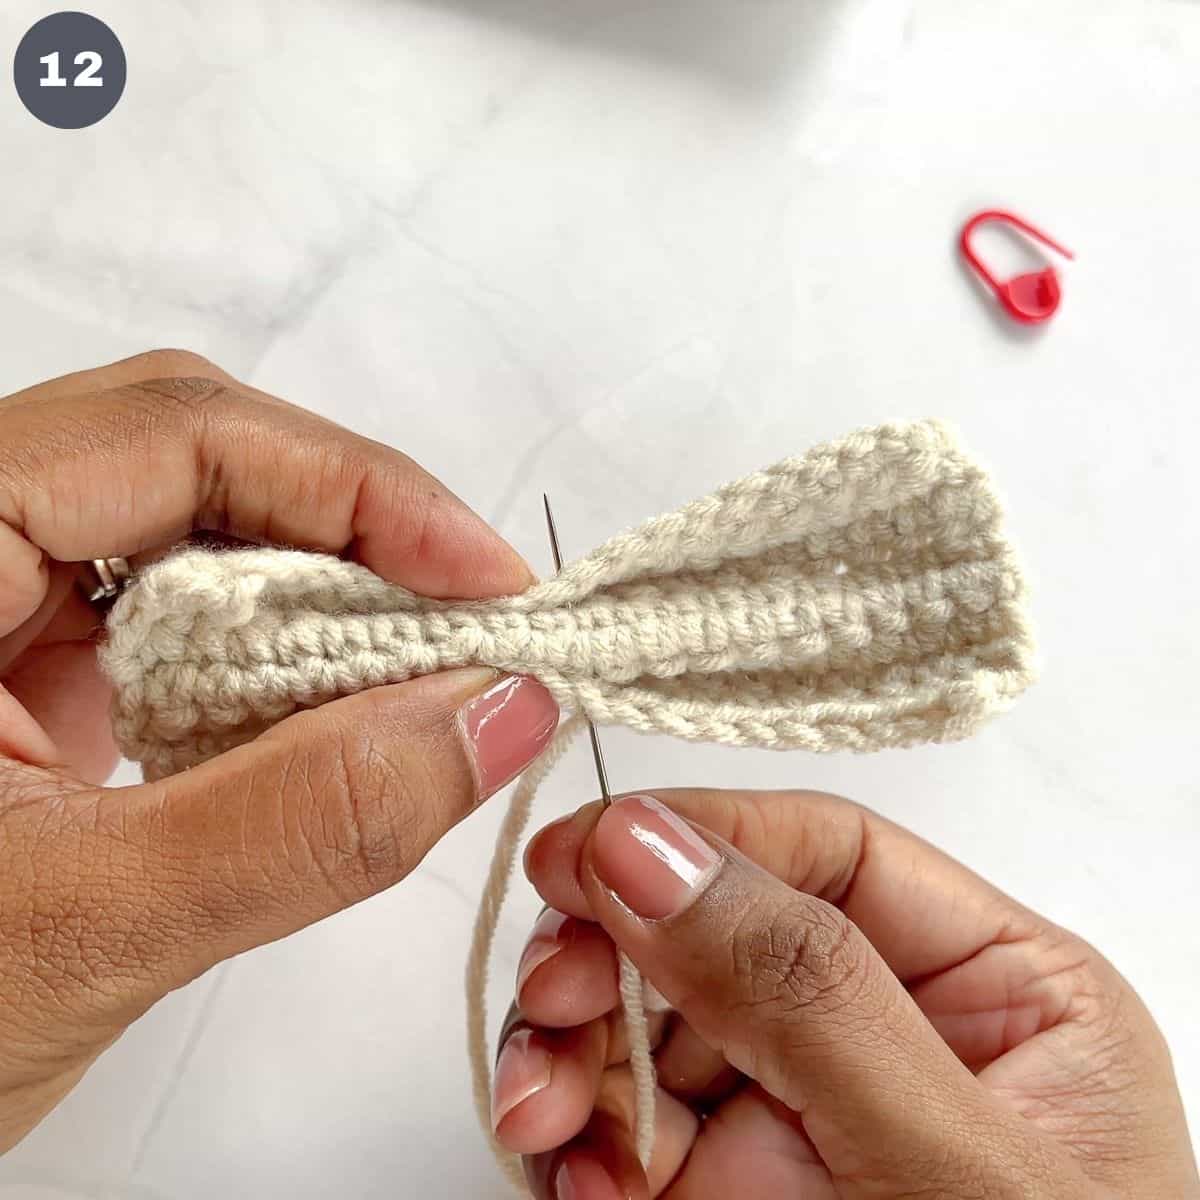 Stitching a crochet bow.